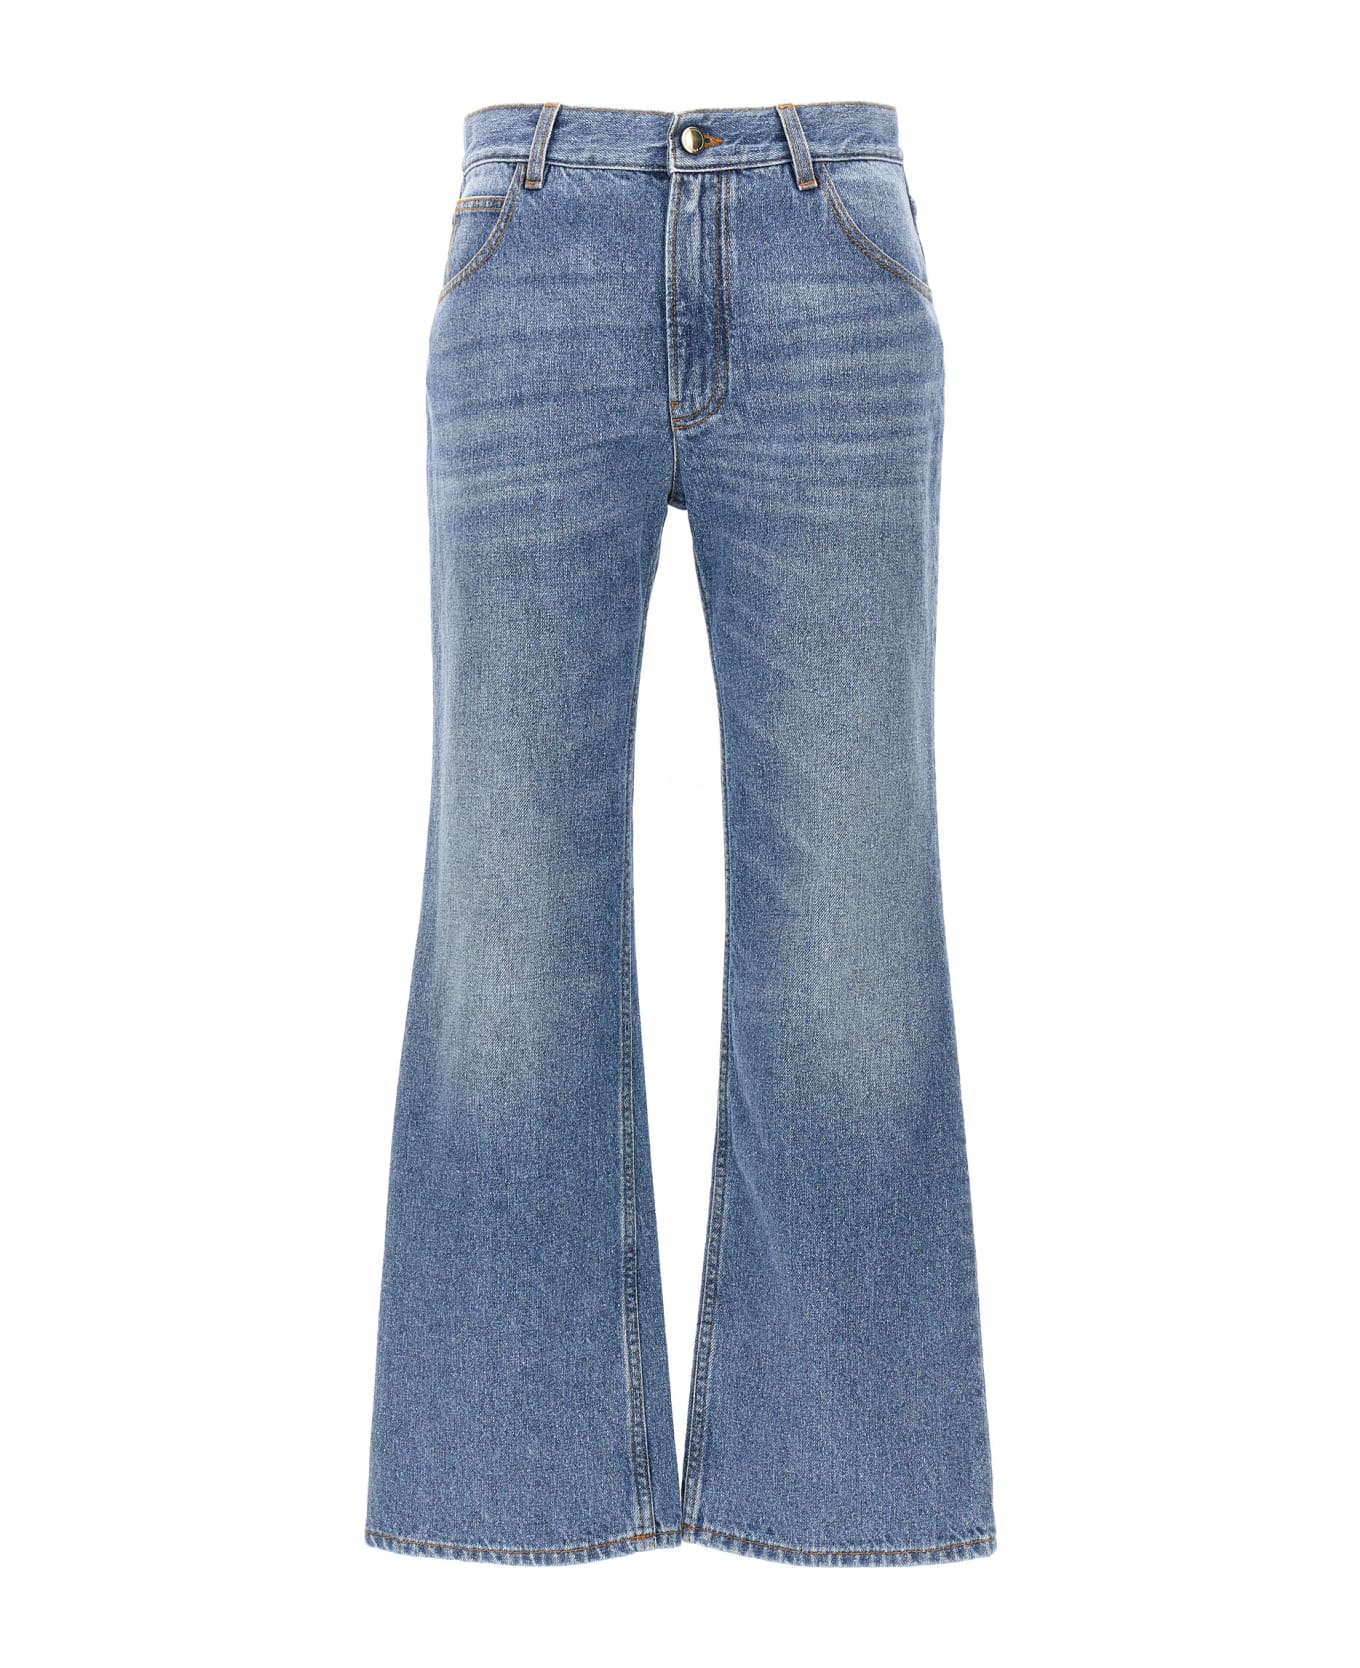 Chloé Denim Cropped Cut Jeans - Light Blue デニム